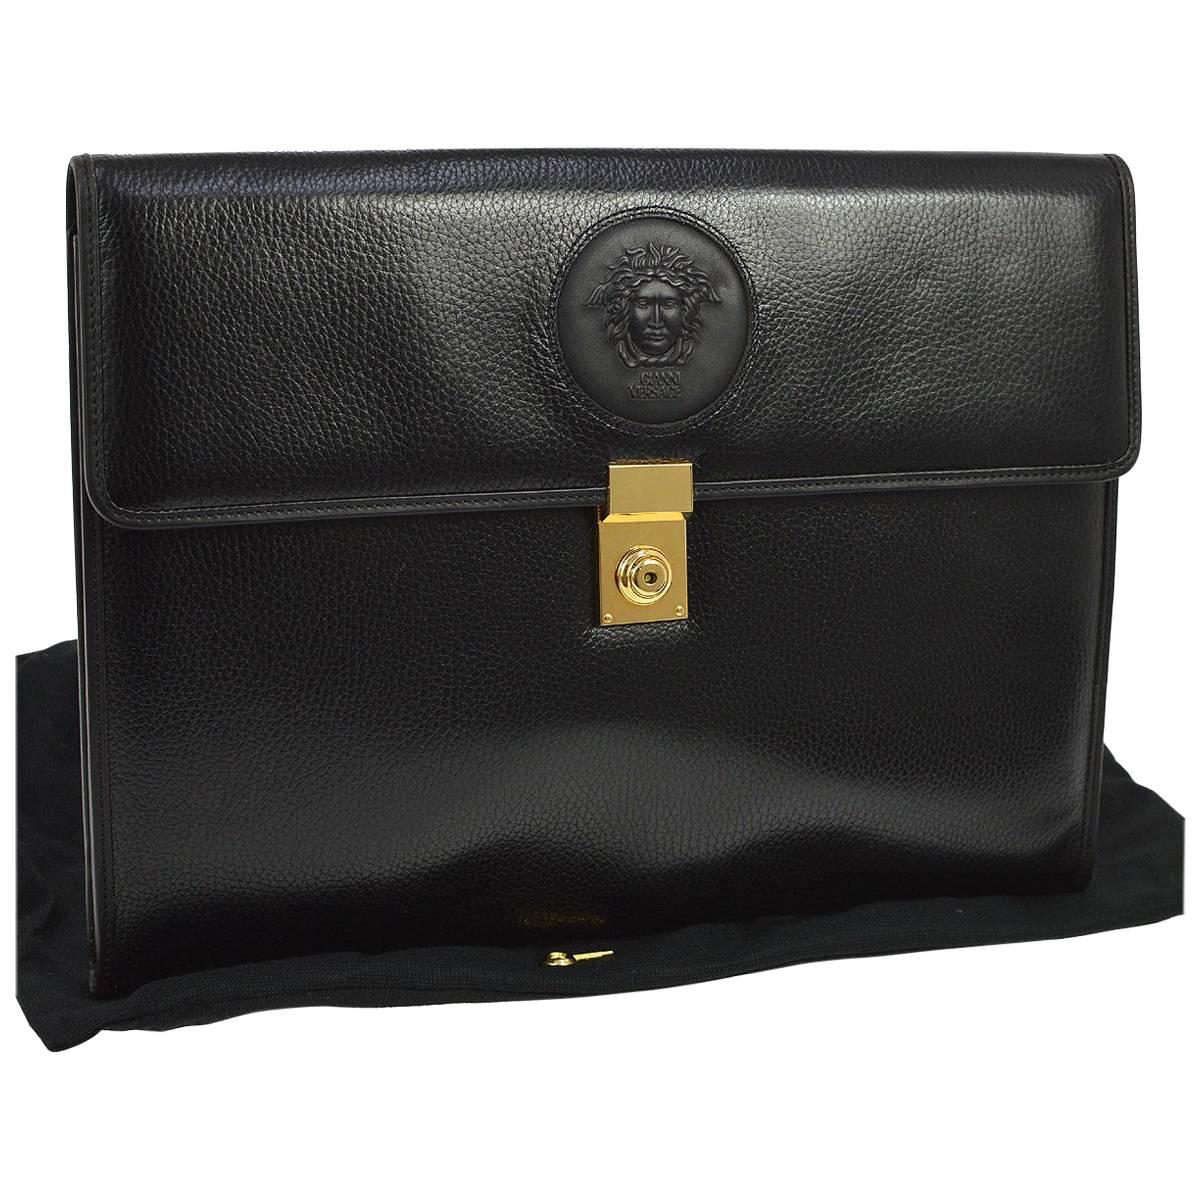 Versace Medusa Head Black Leather Envelope Evening Flap Clutch Bag with Key